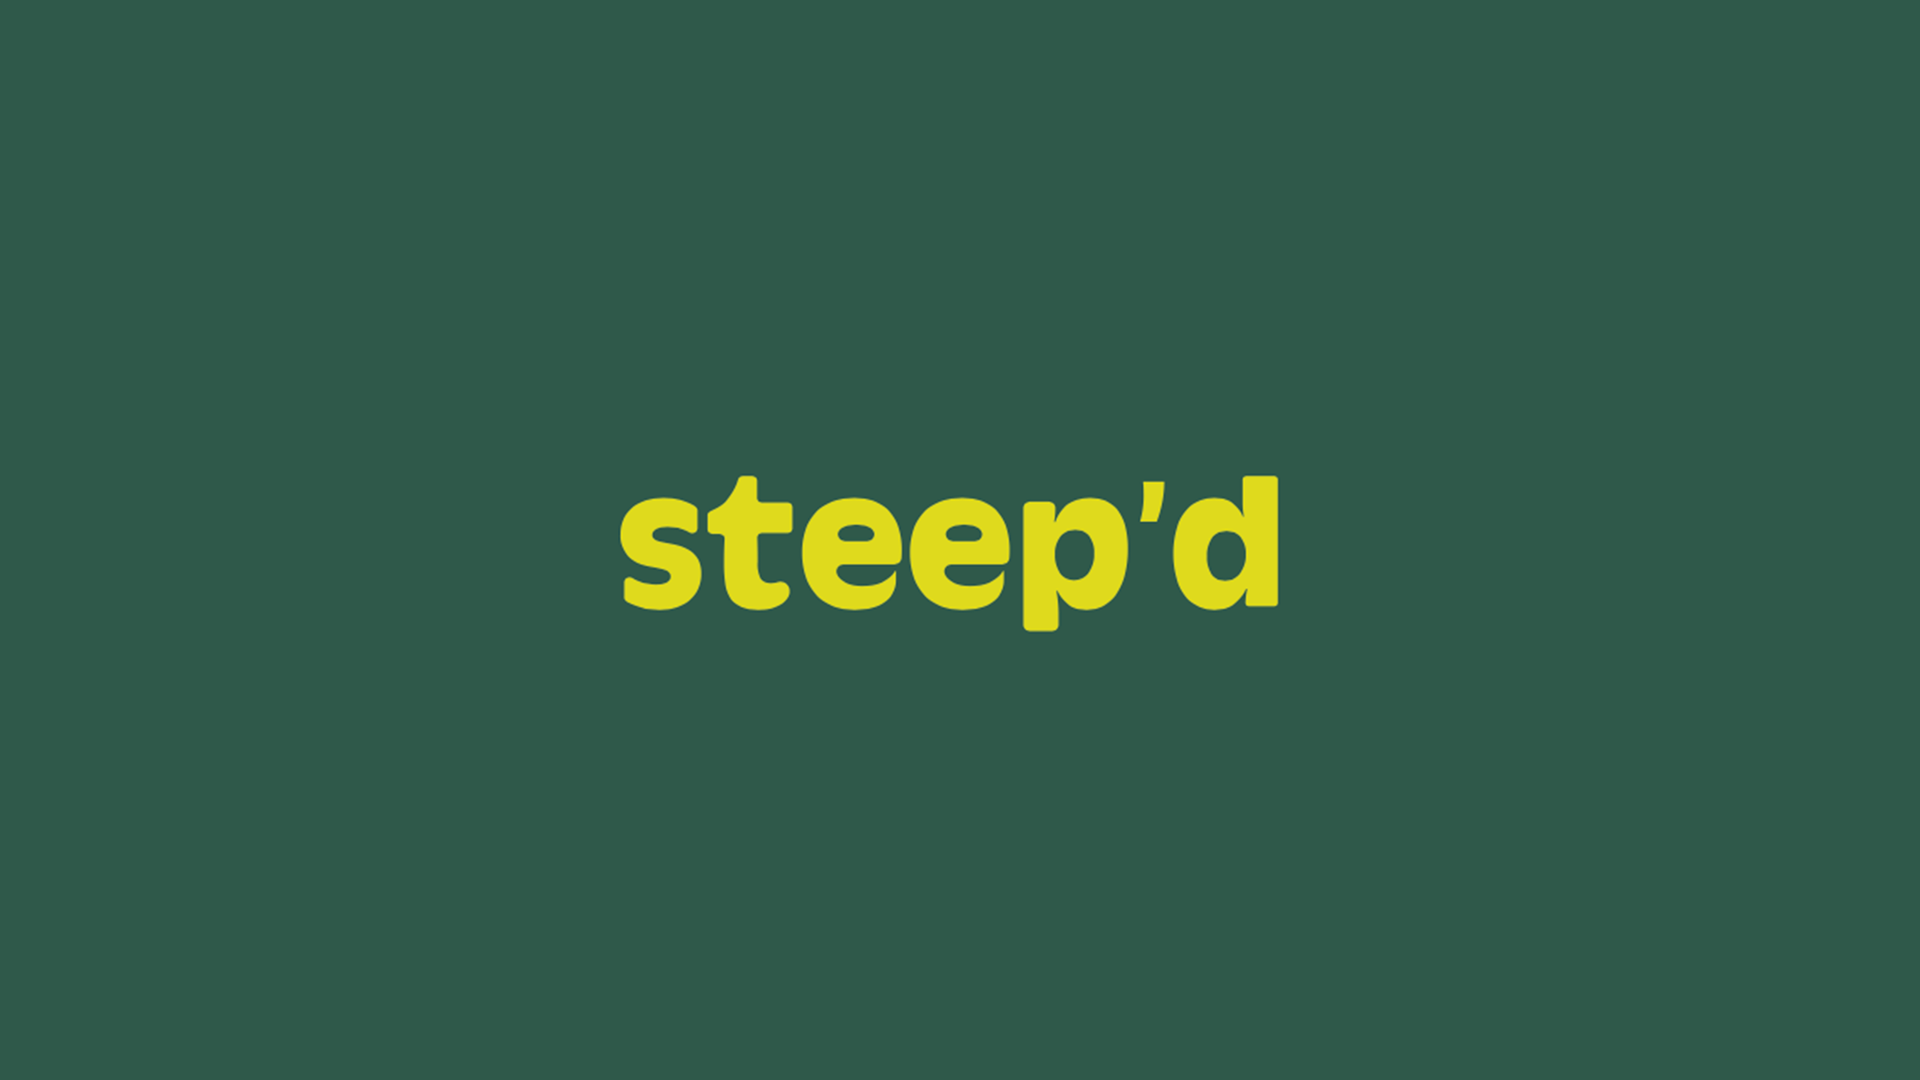 steep'd